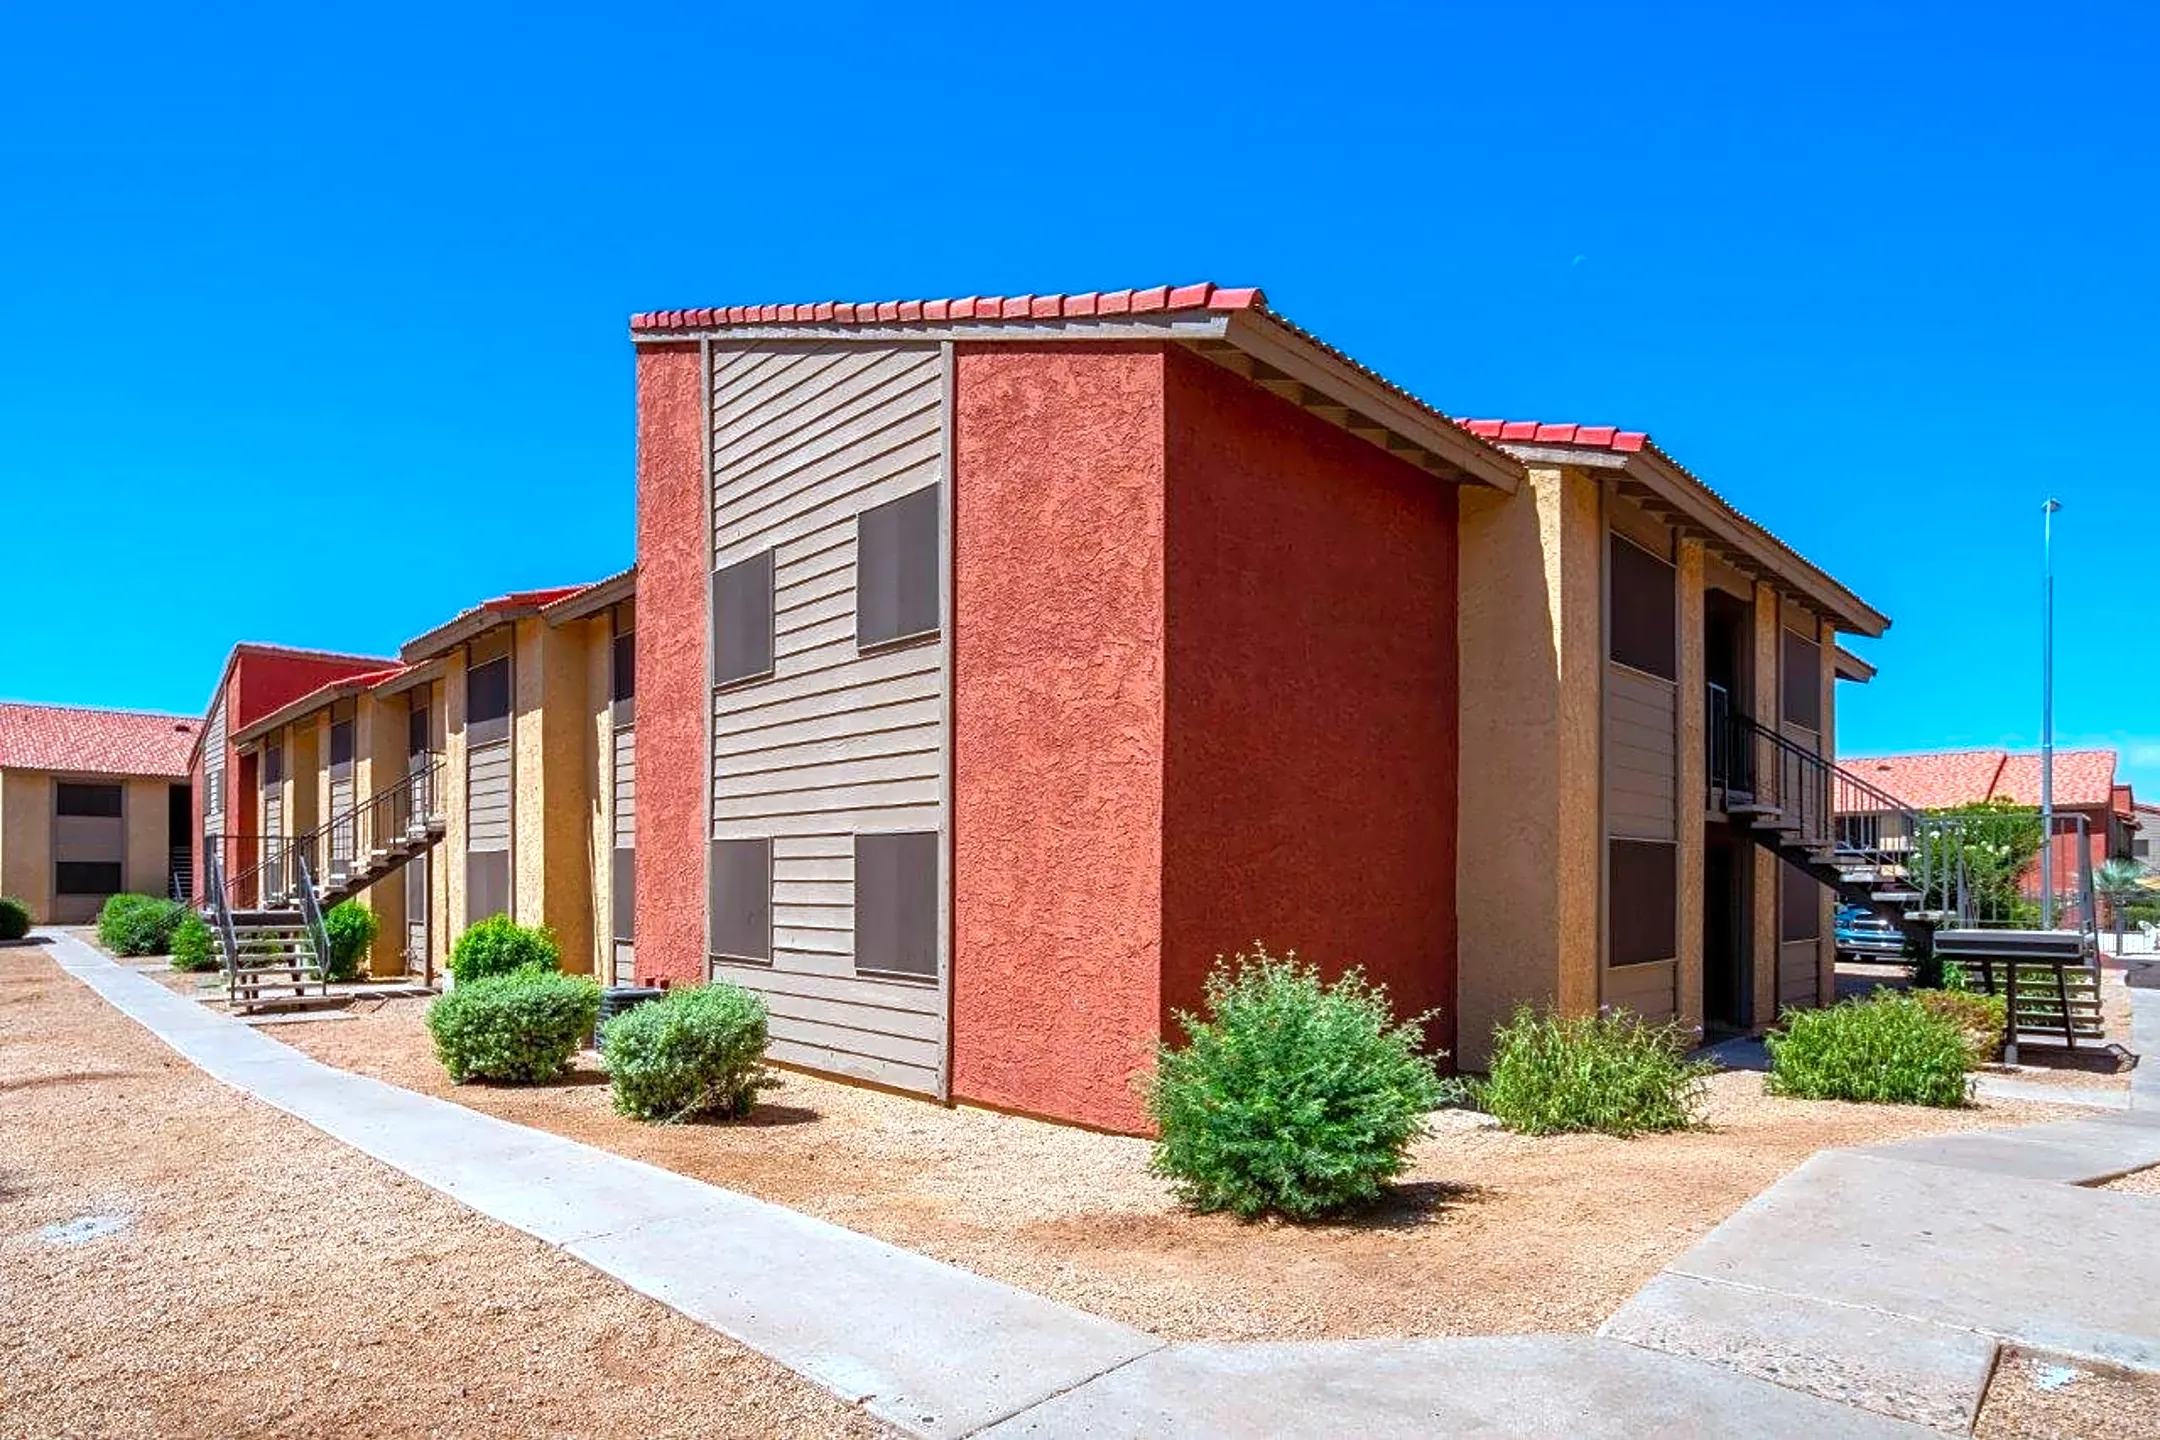 Building - Portola West McDowell - Phoenix, AZ